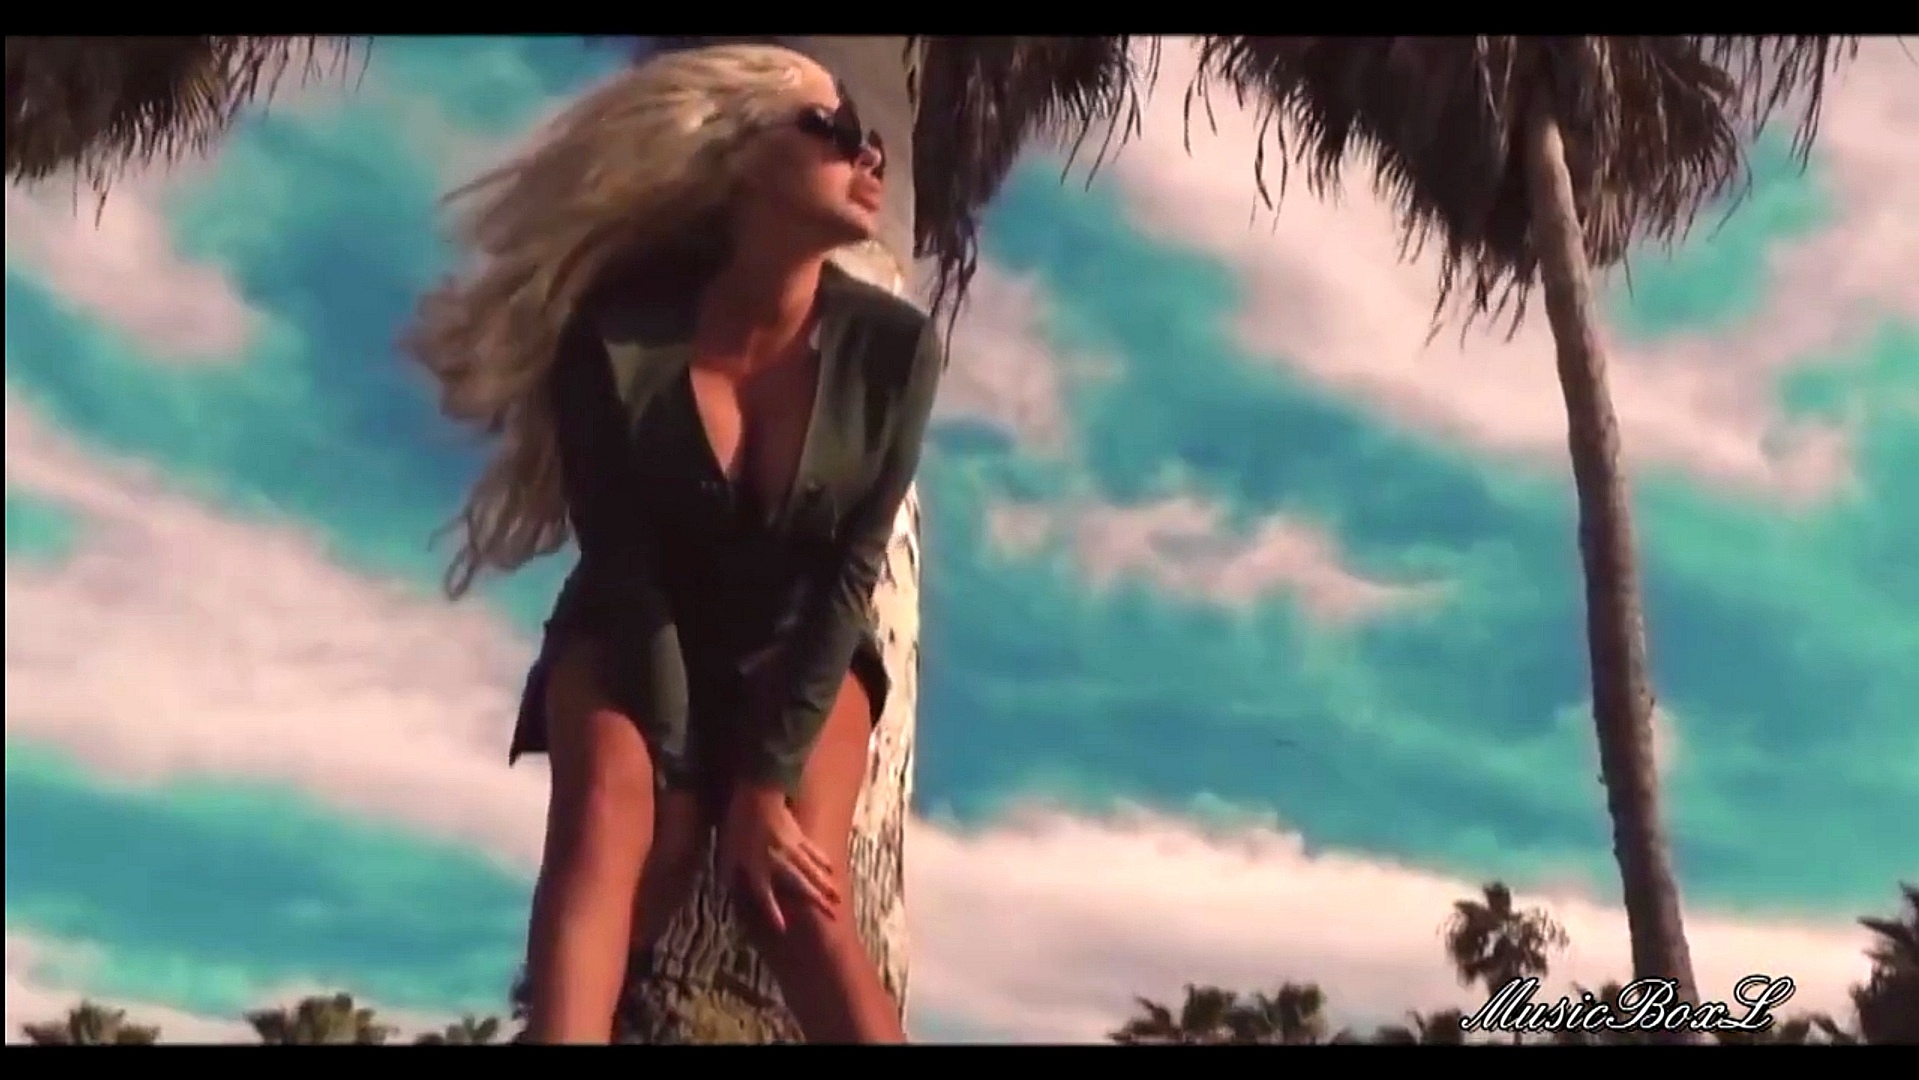 Lana del rey   summertime sadness remix  Music Box L Video